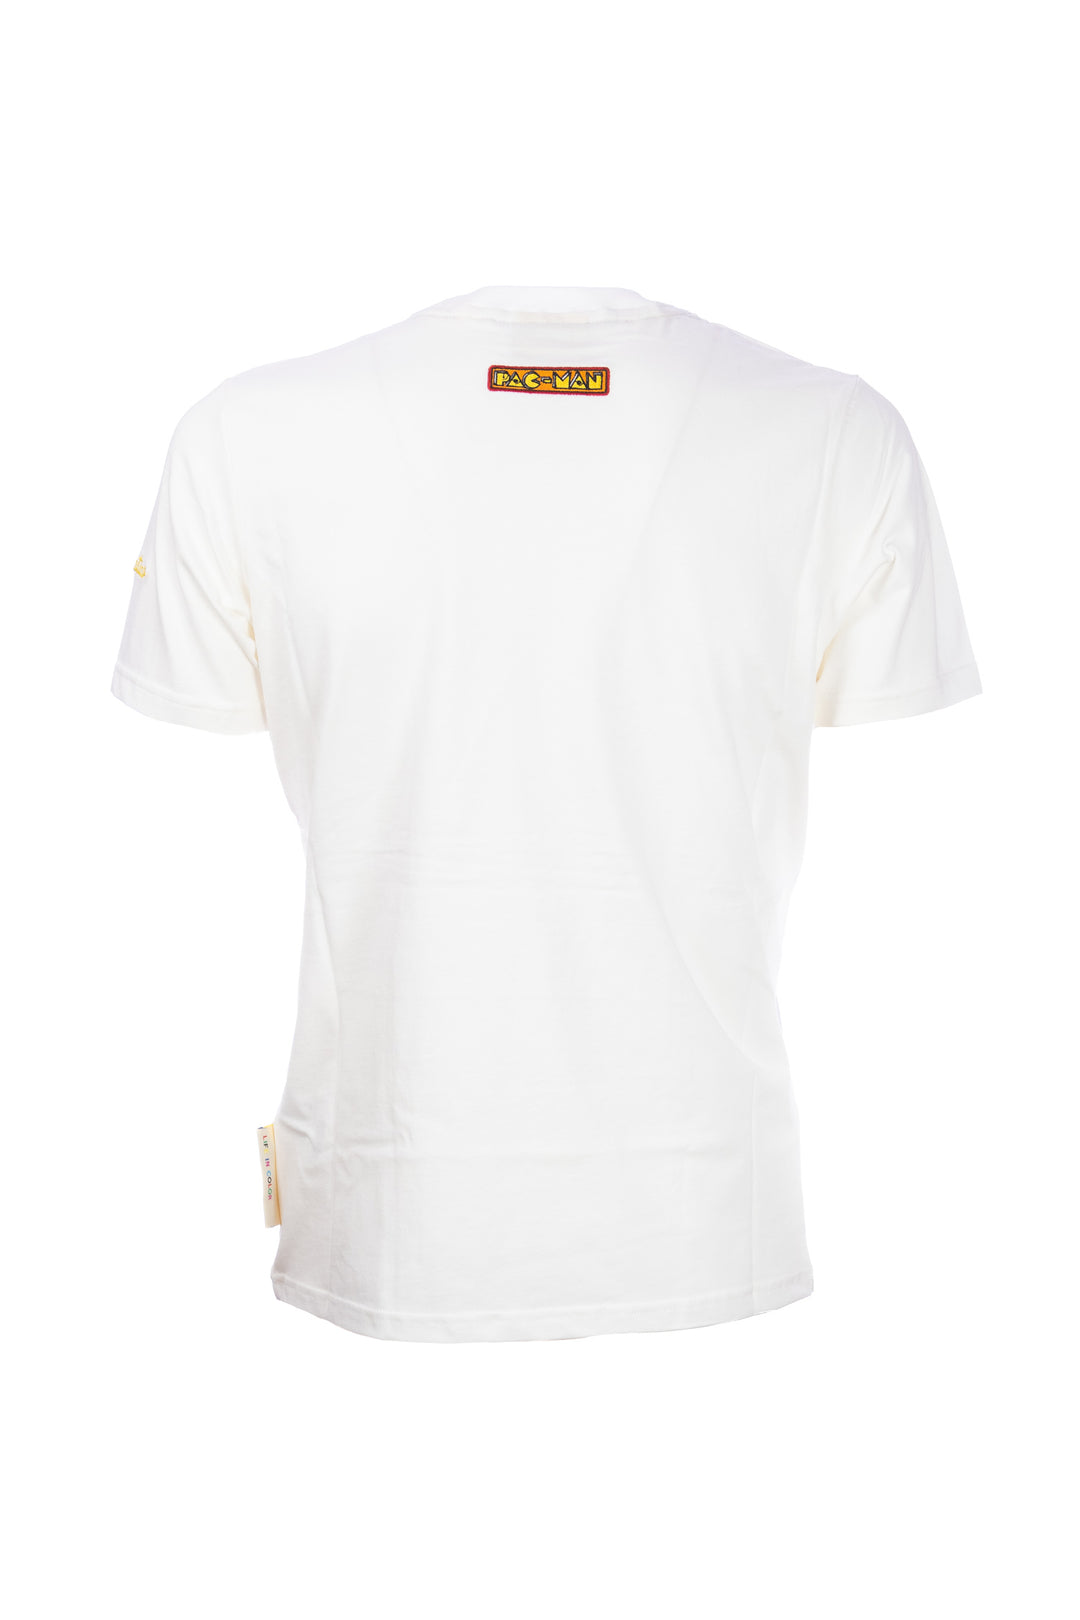 TEMATICO T-shirt panna in cotone con stampa logo Pac-Man - Mancinelli 1954